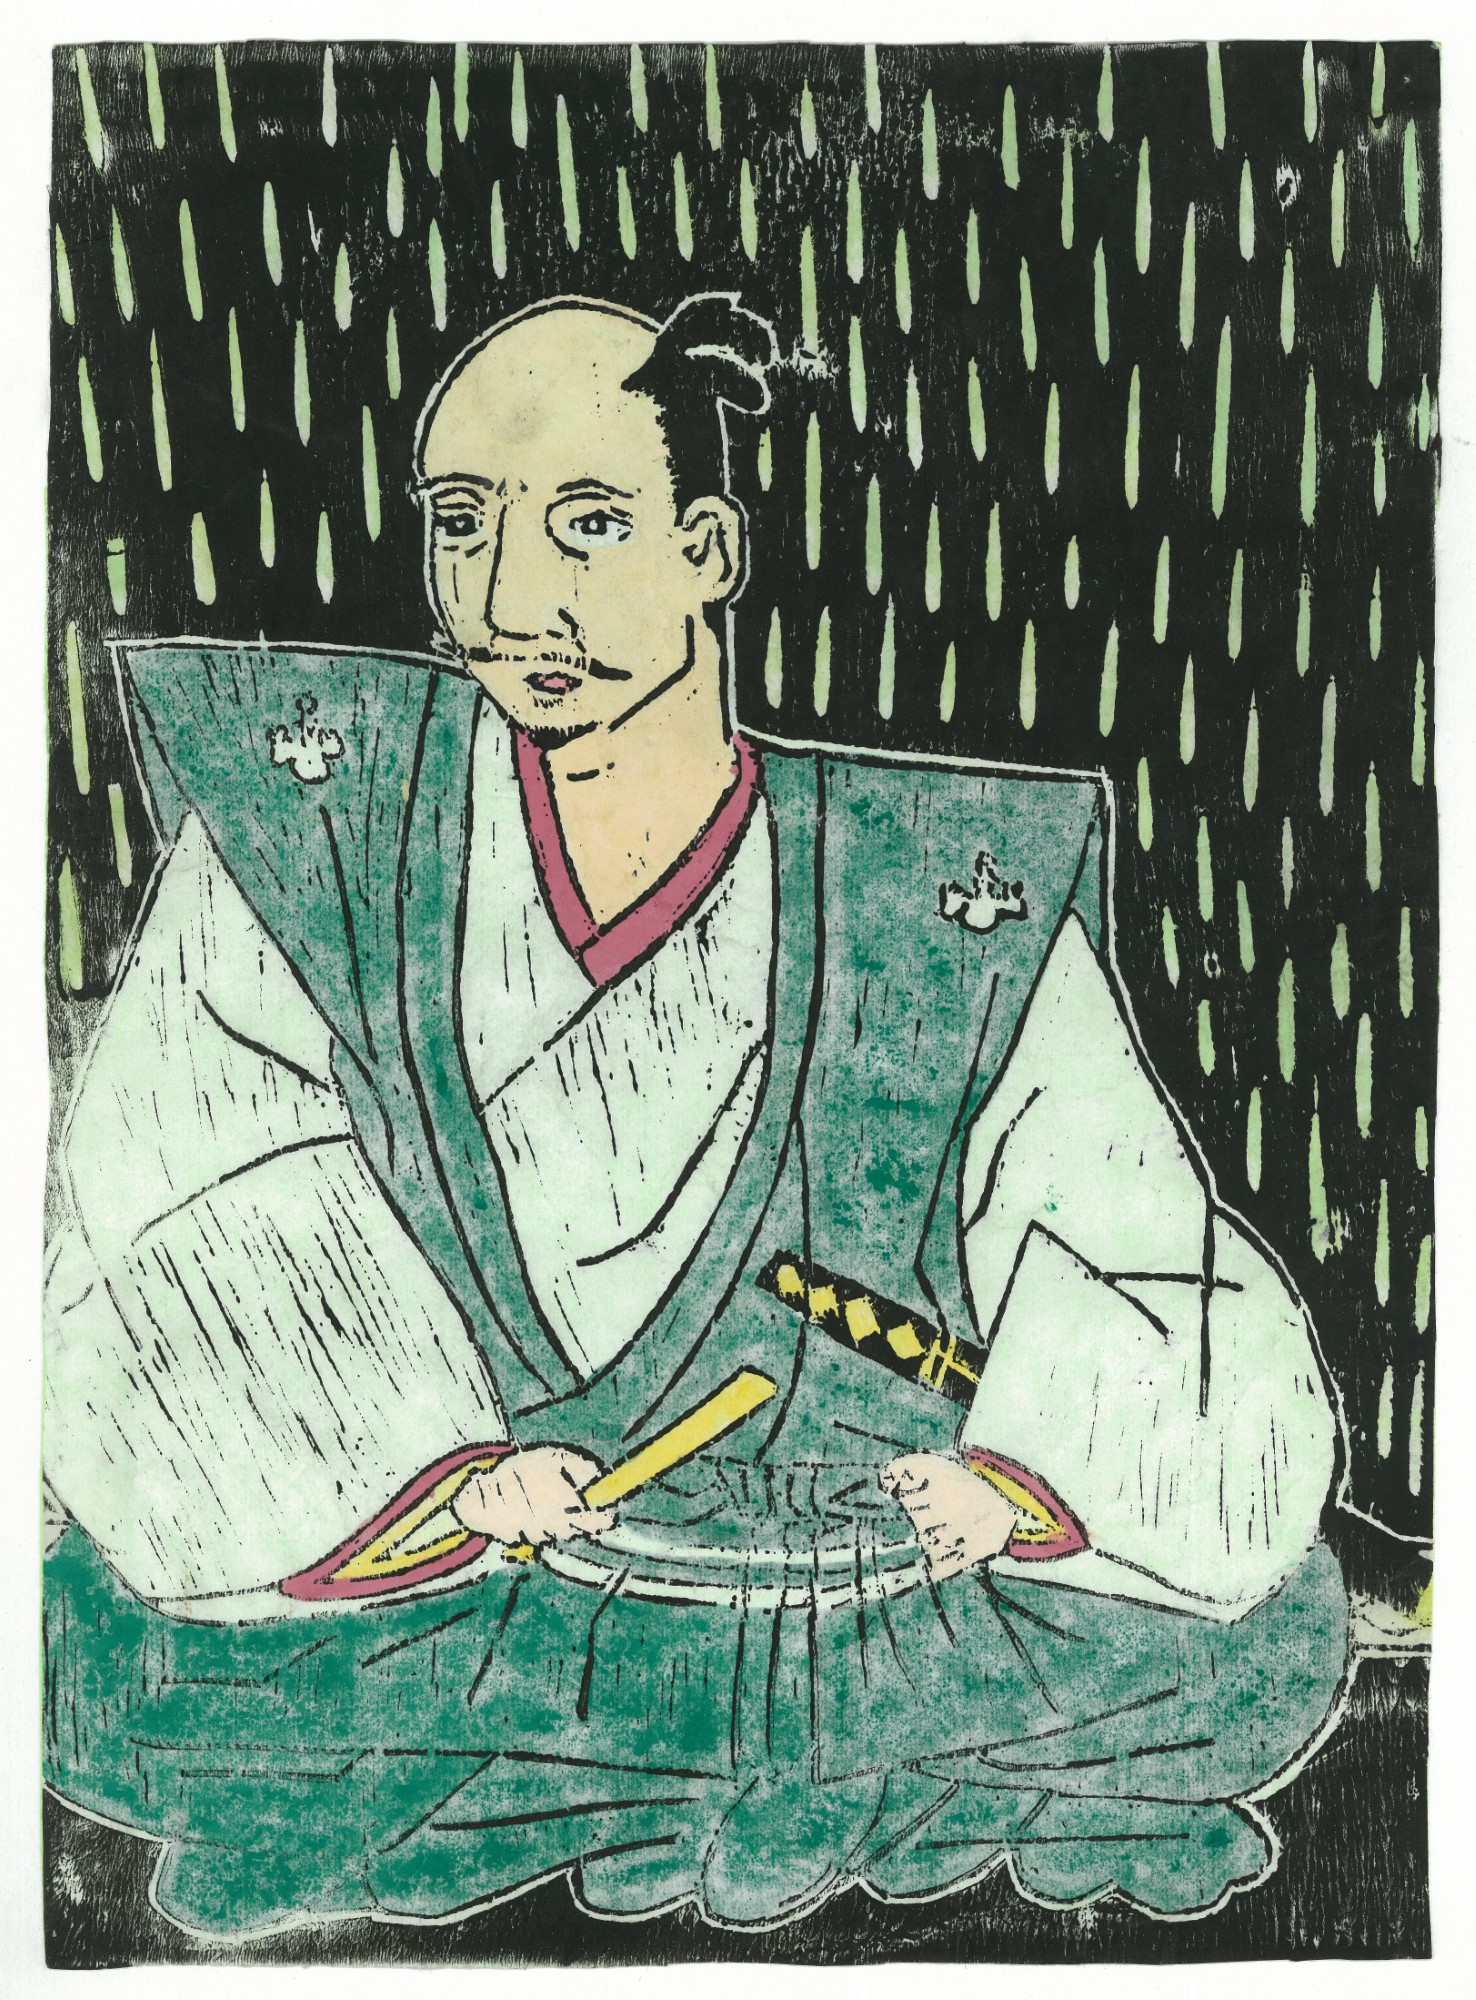 Student artwork - Oda Nobunaga - Japanese Warrior